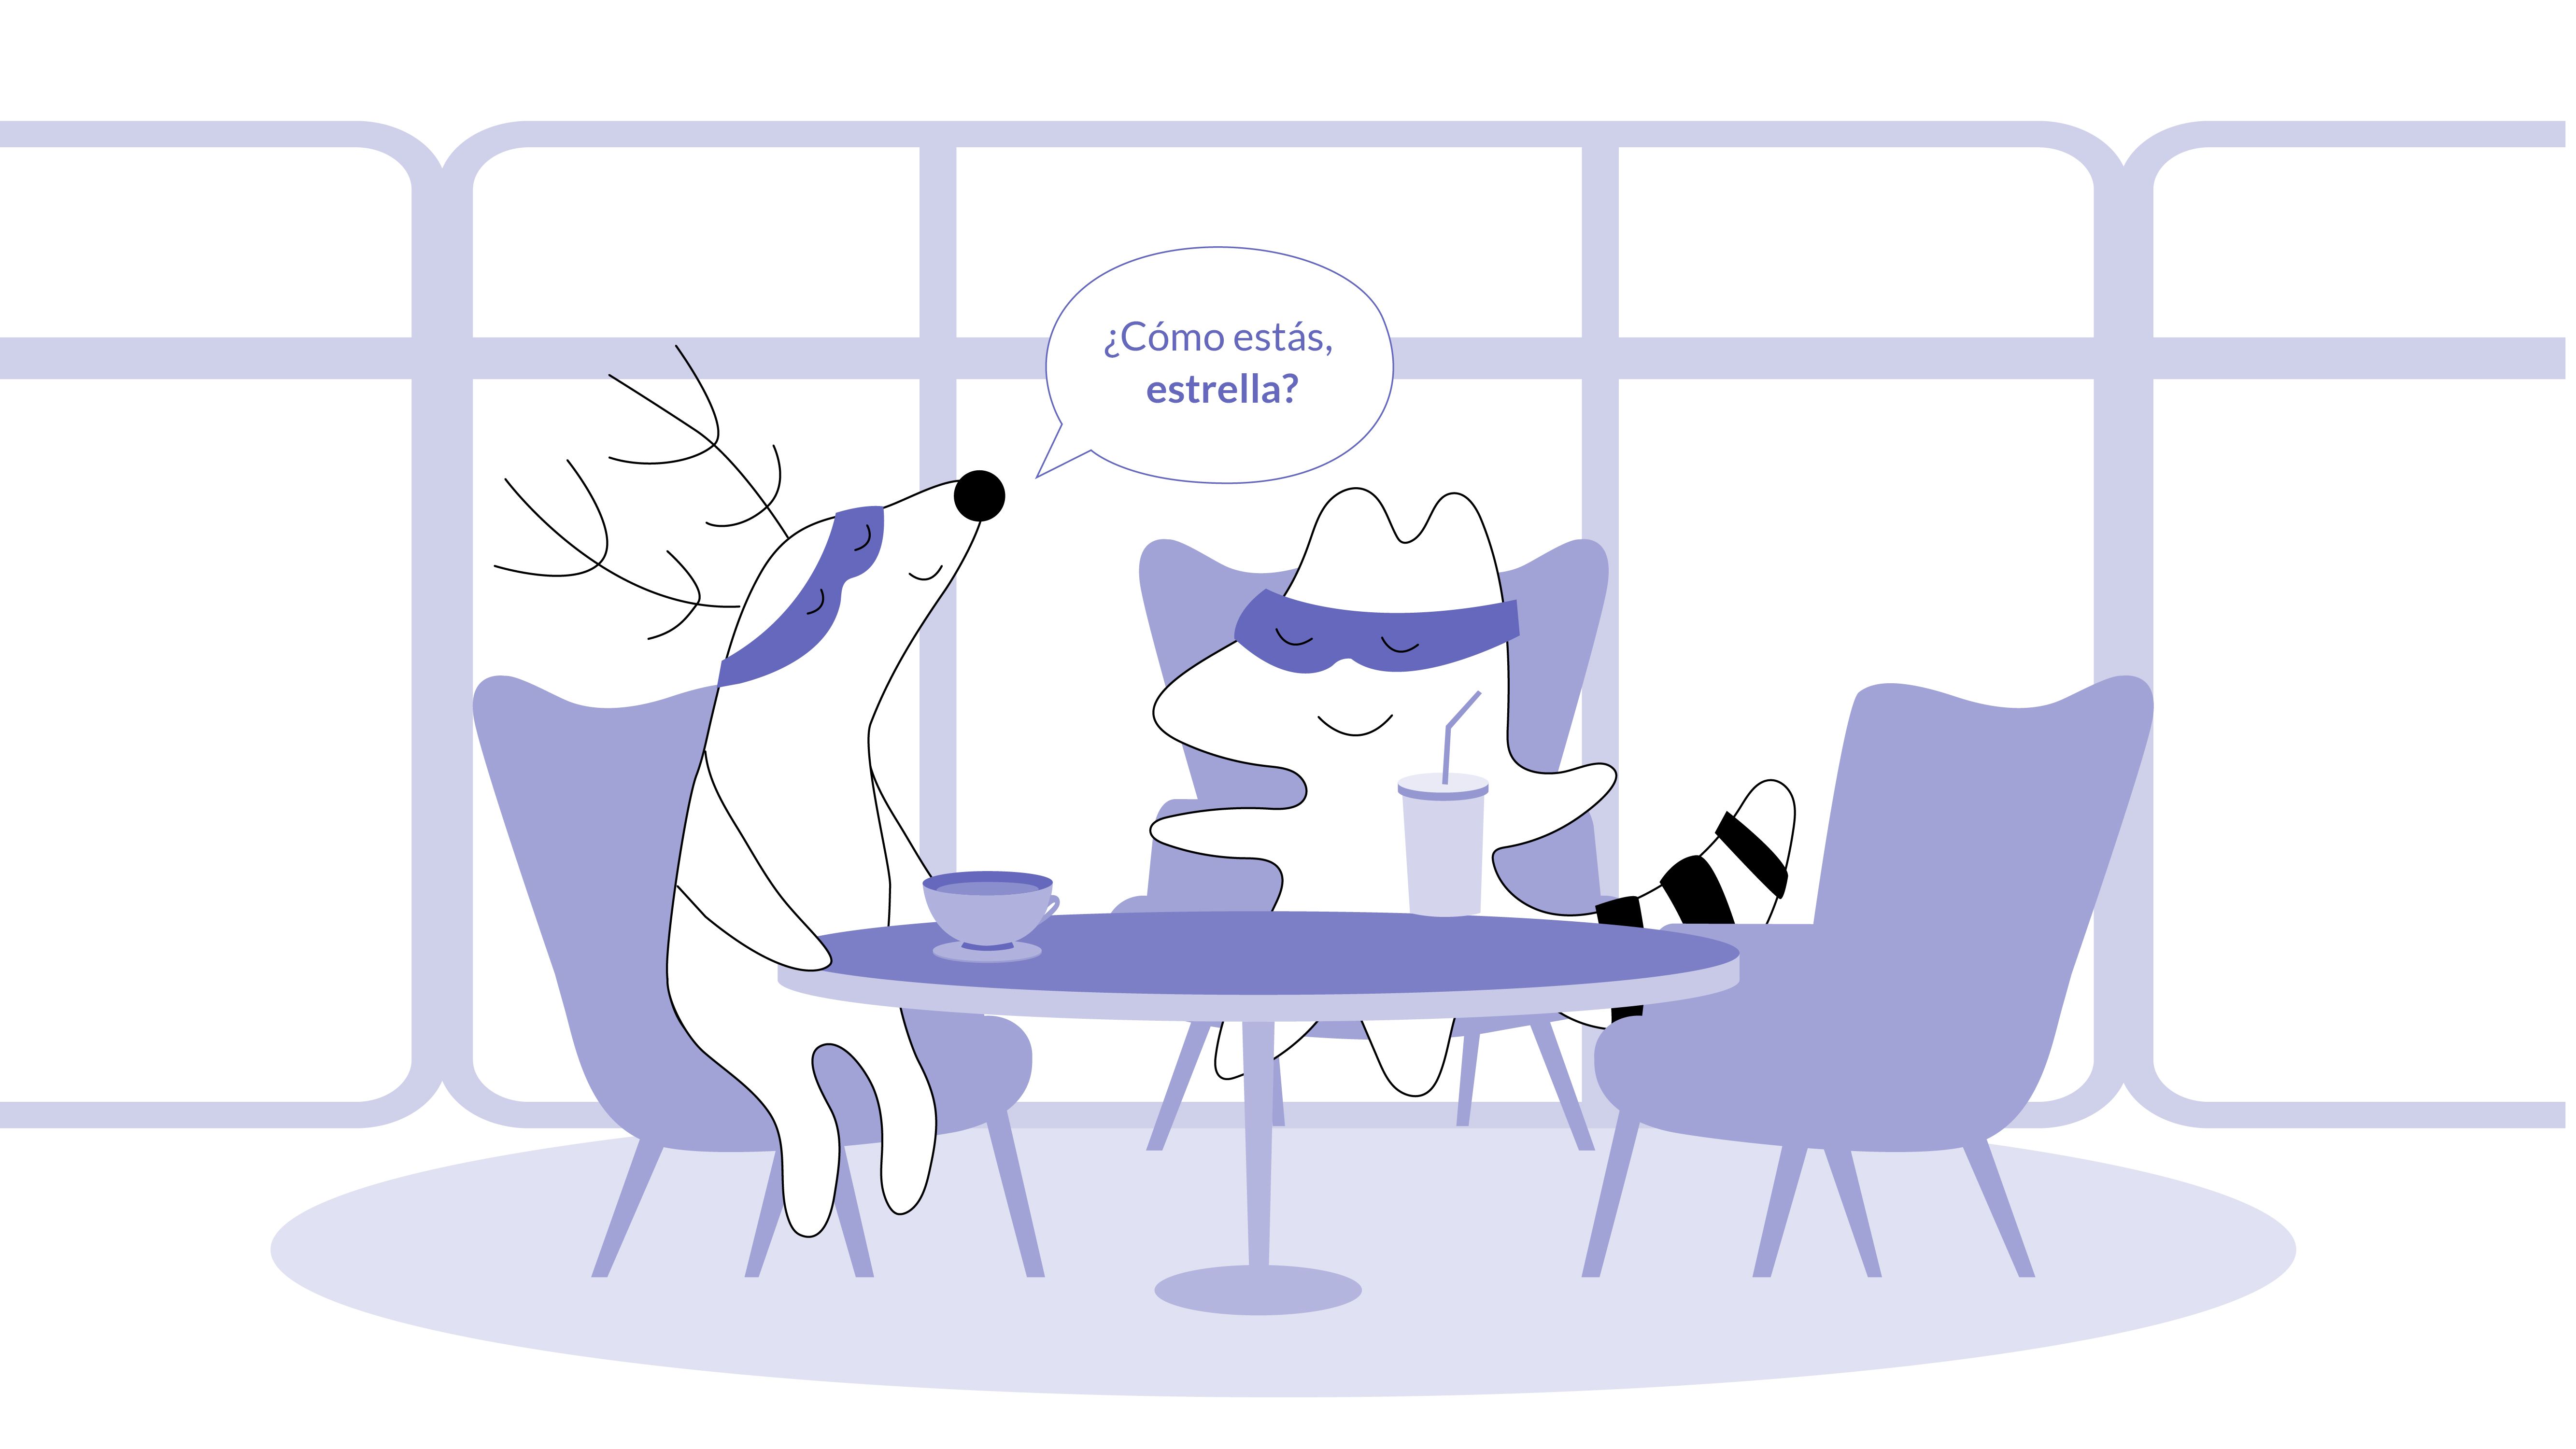 Soren and Iggy are having coffee at the coffee shop, Soren says, “¿Cómo estás, estrella?”